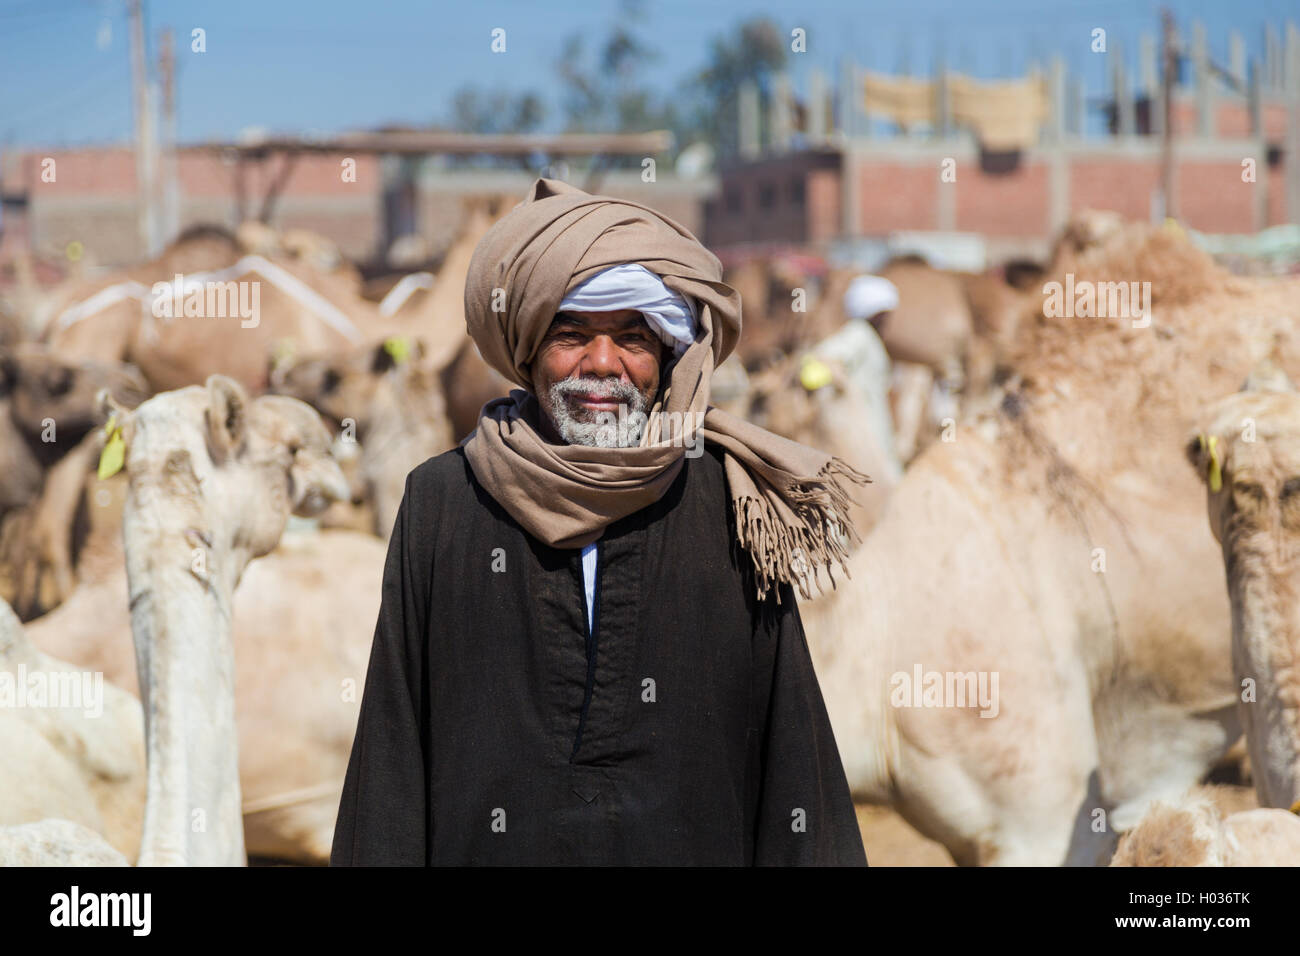 DARAW, EGYPT - FEBRUARY 6, 2016: Portrait of local camel salesman on Camel market. Stock Photo